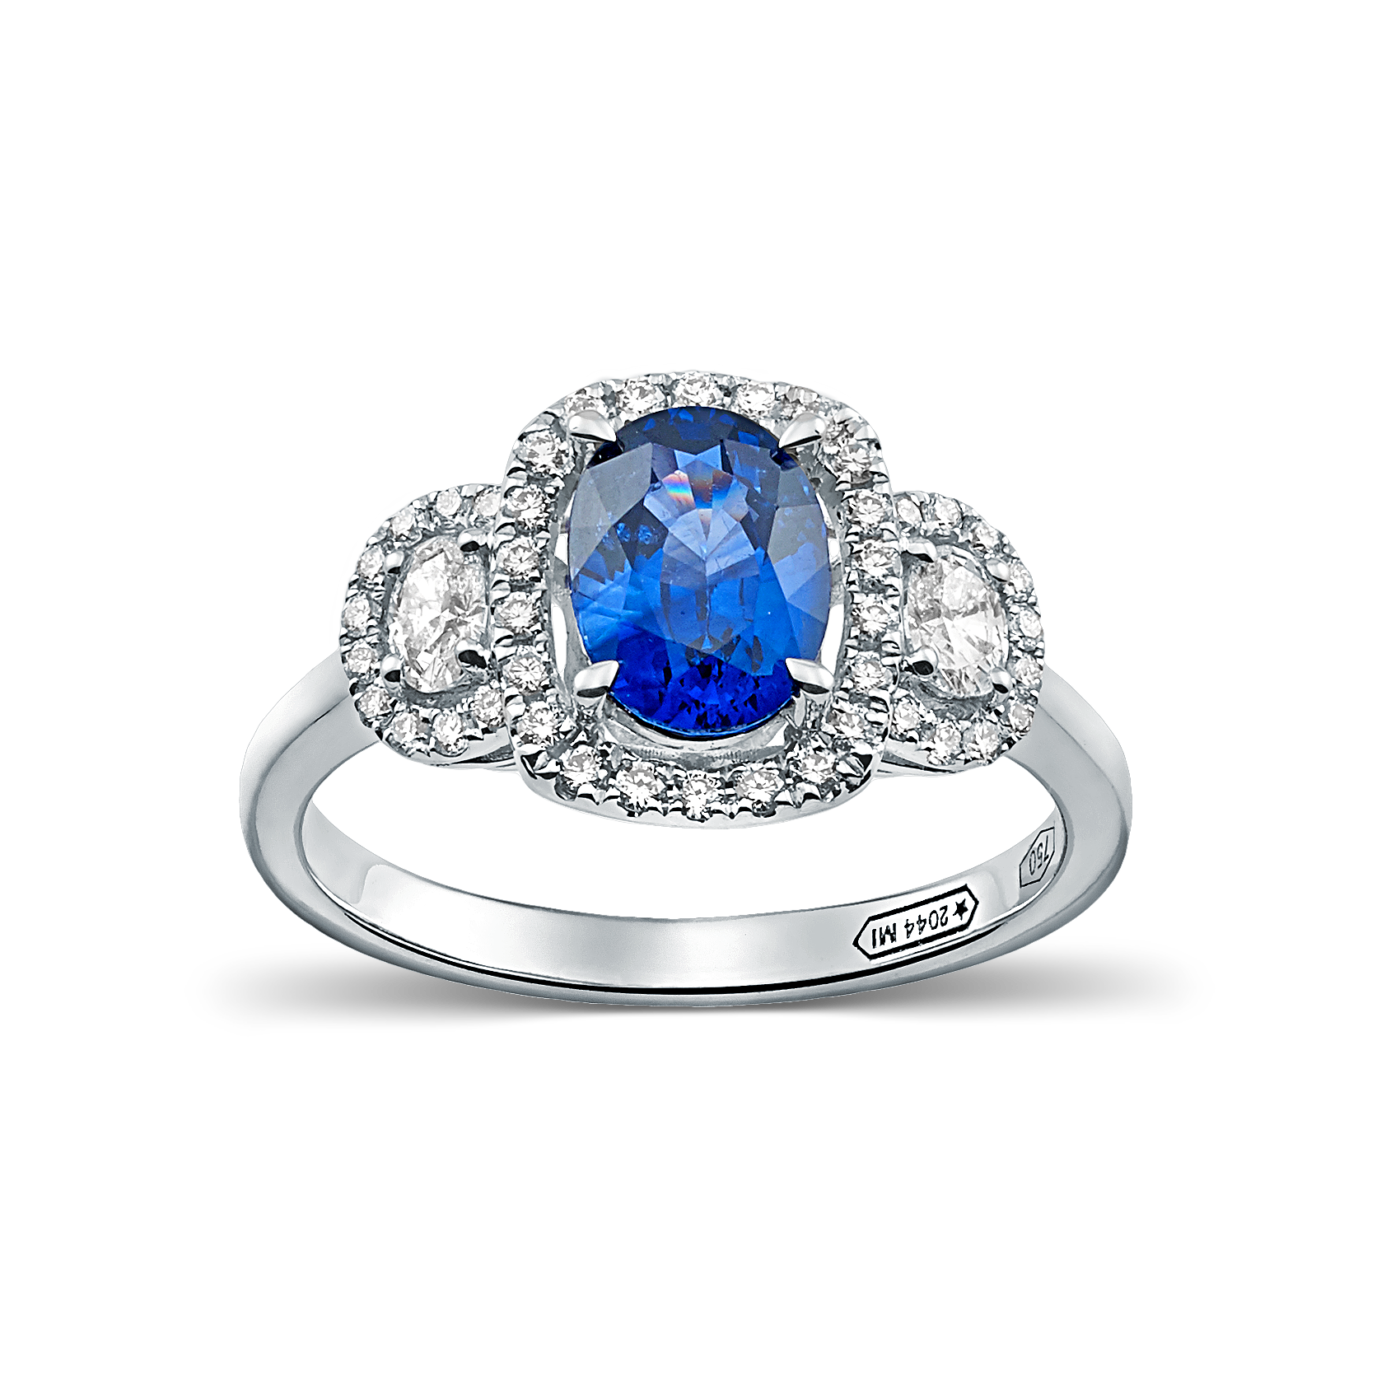 Devous Blue Sapphire Ring with Diamonds